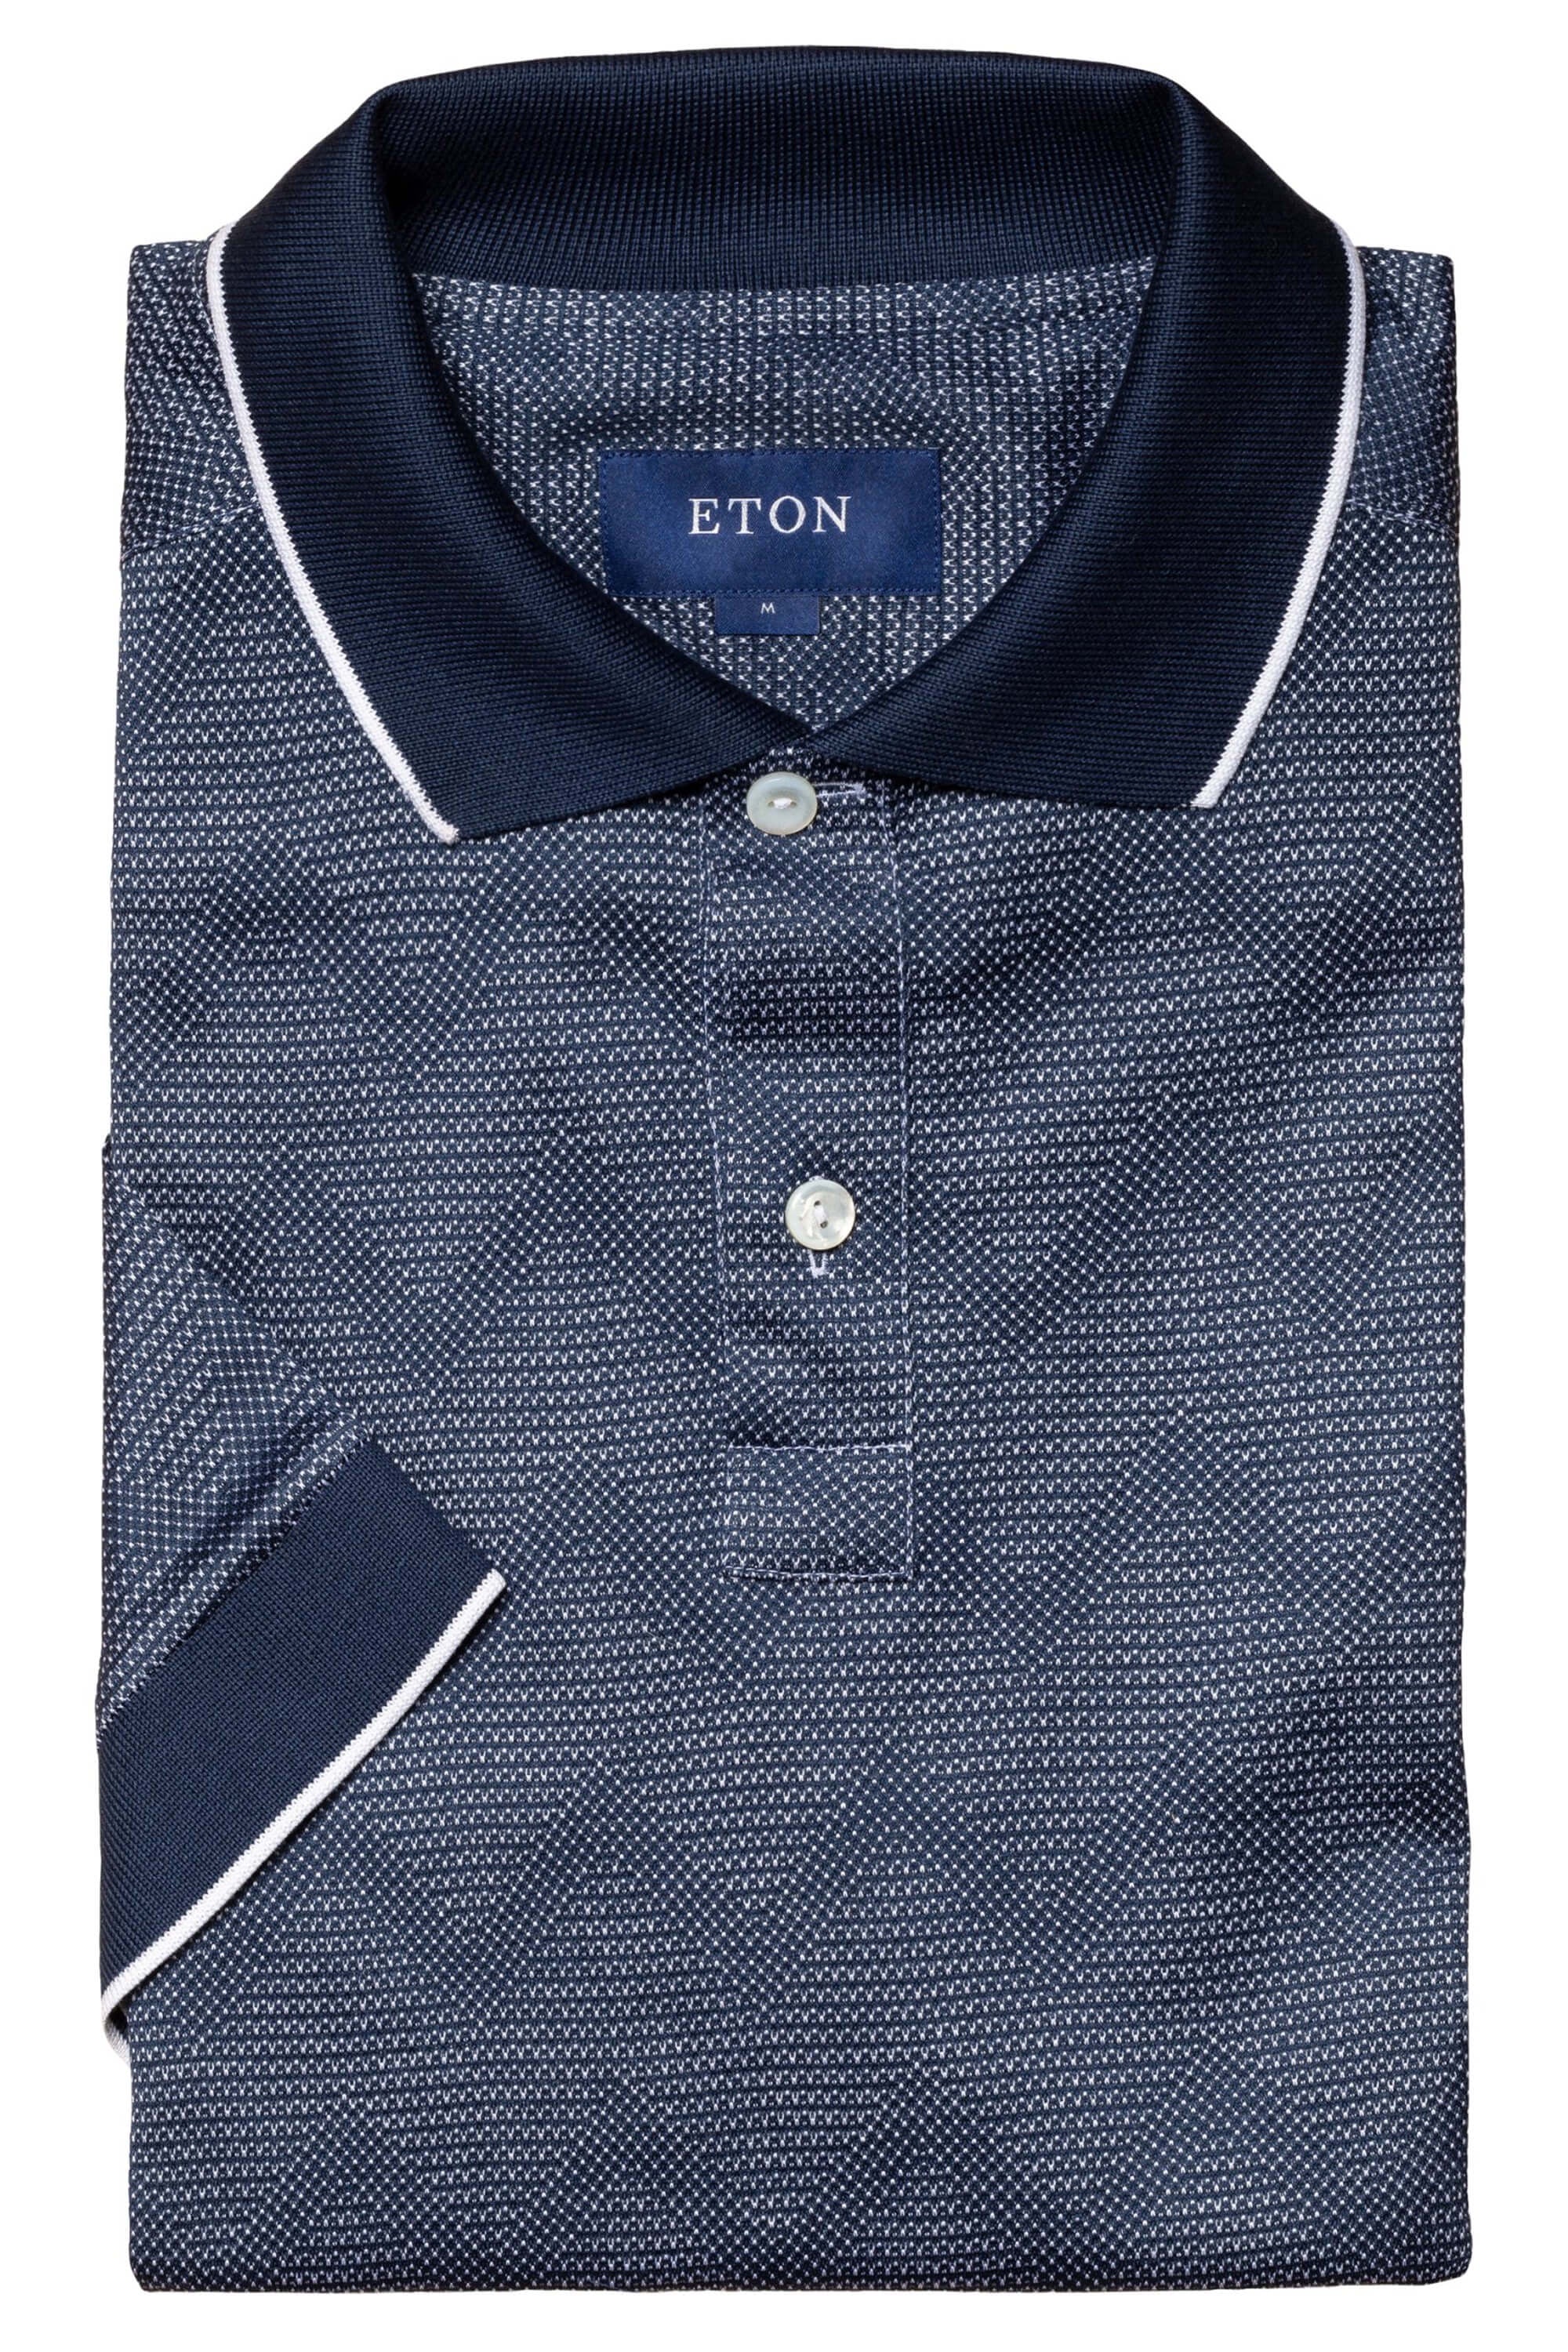 Eton Navy Blue Knit Collar Polo Shirt